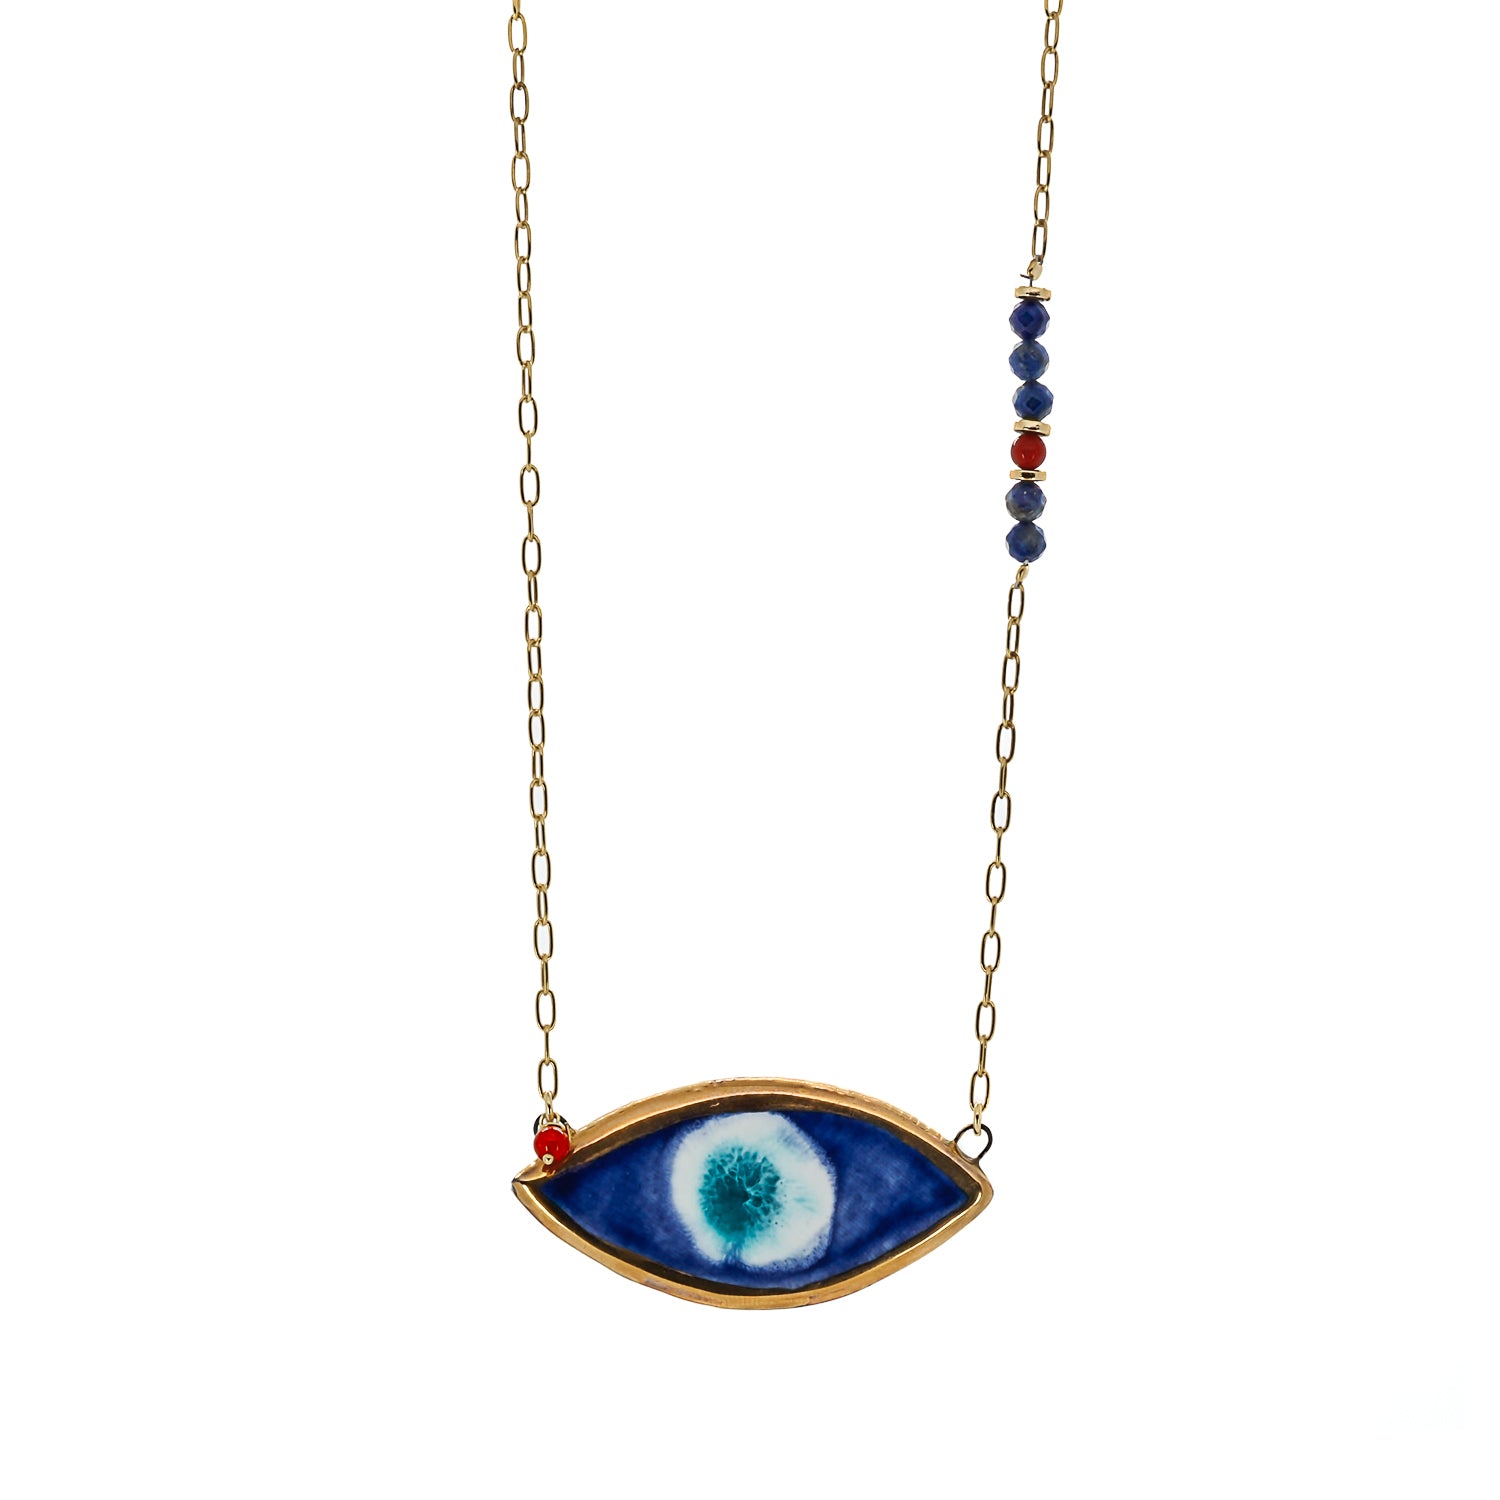 Handmade Ceramic Evil Eye Necklace - Artistry and Symbolism.